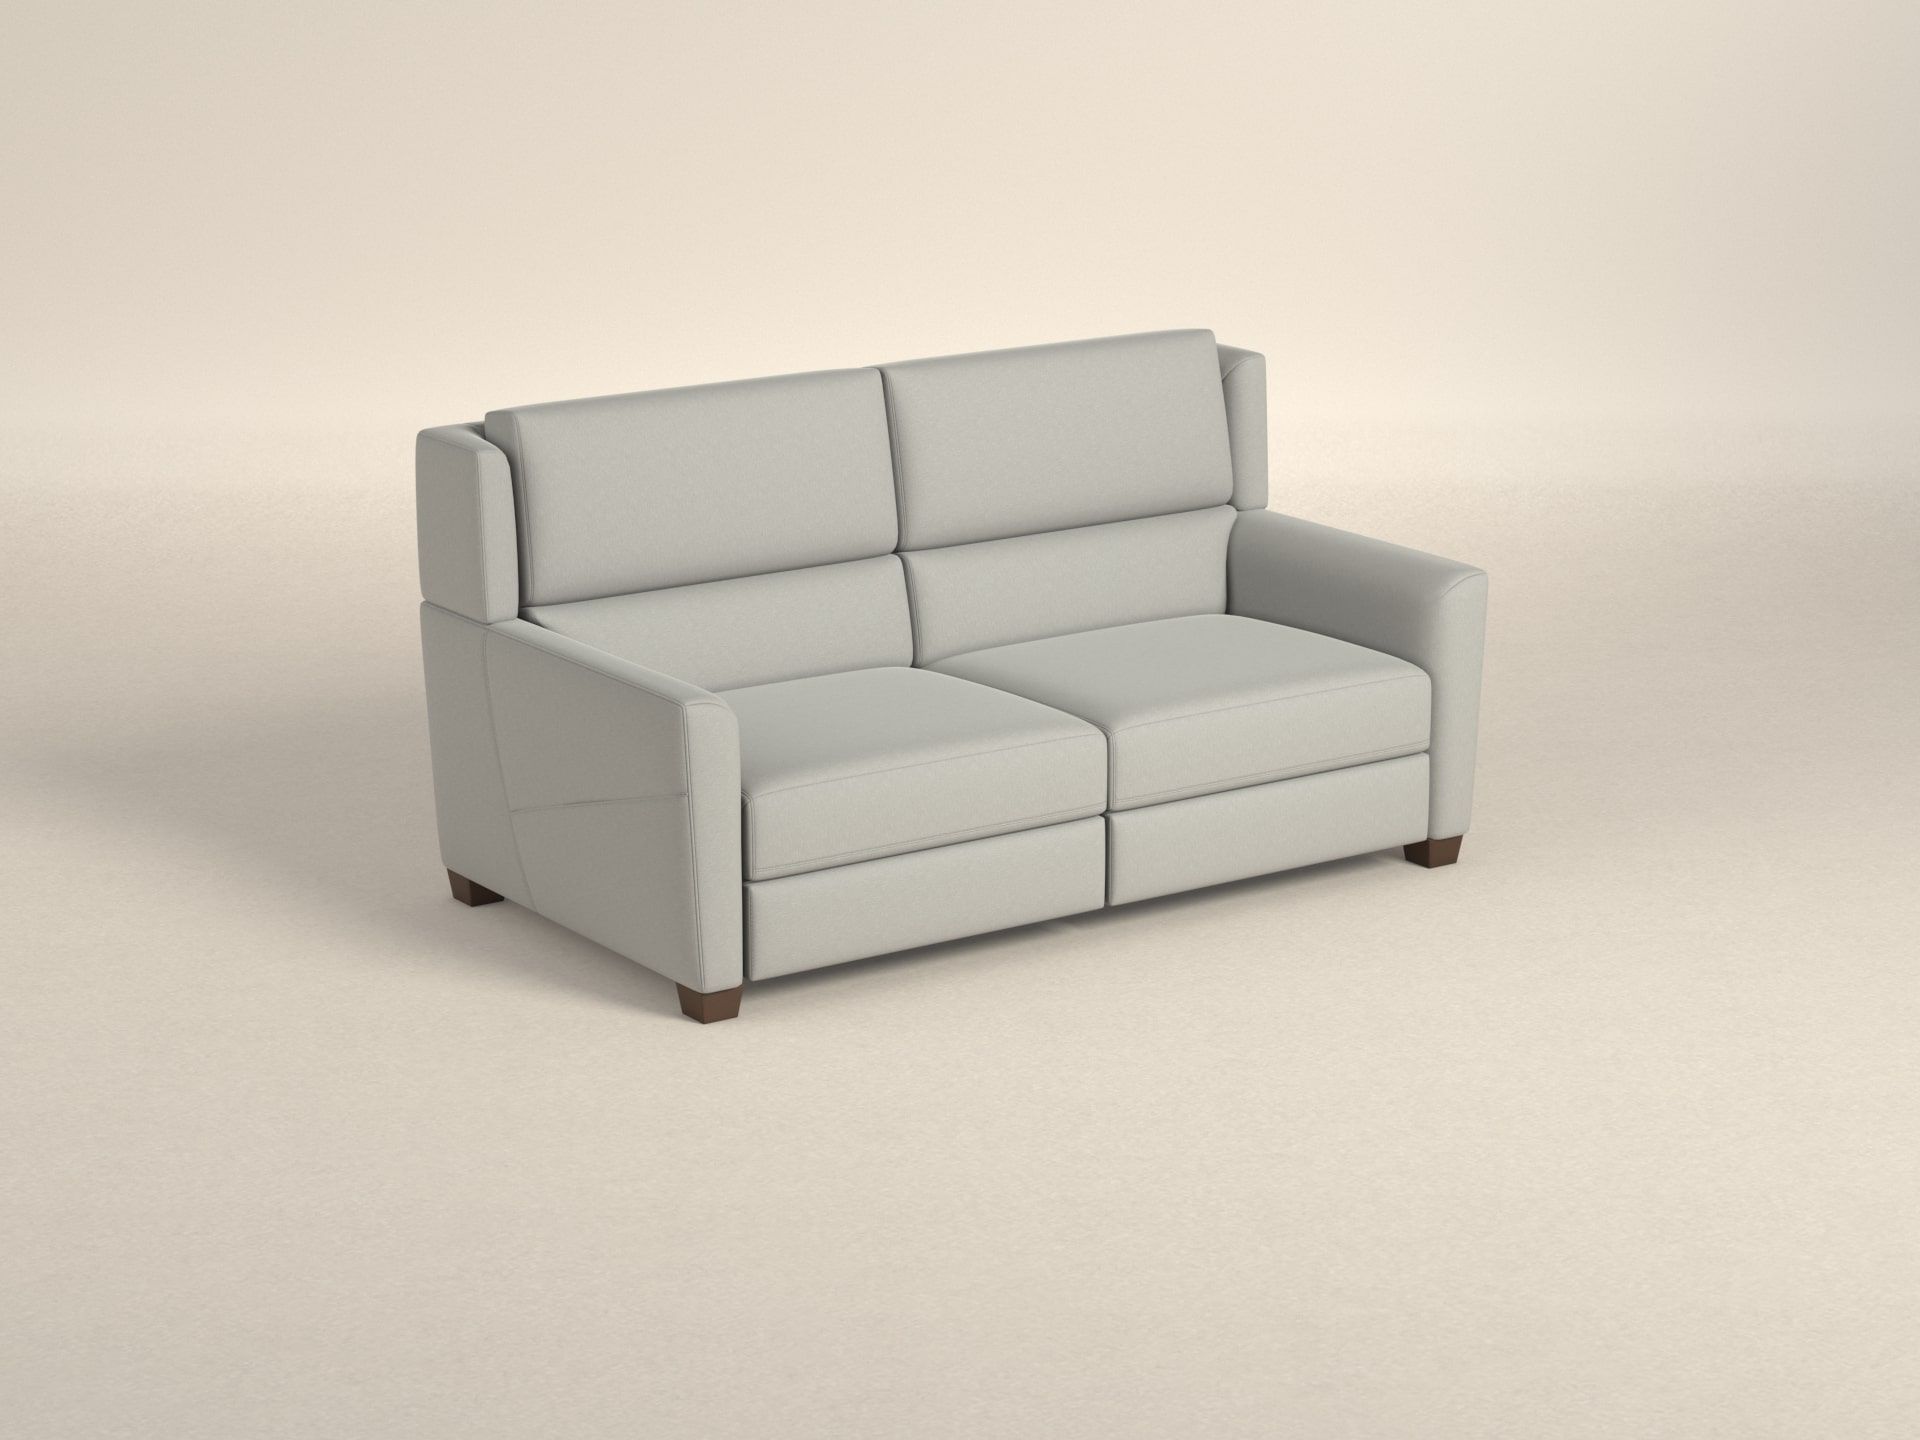 Preset default image - Caloroso Recliner Sofa - Fabric